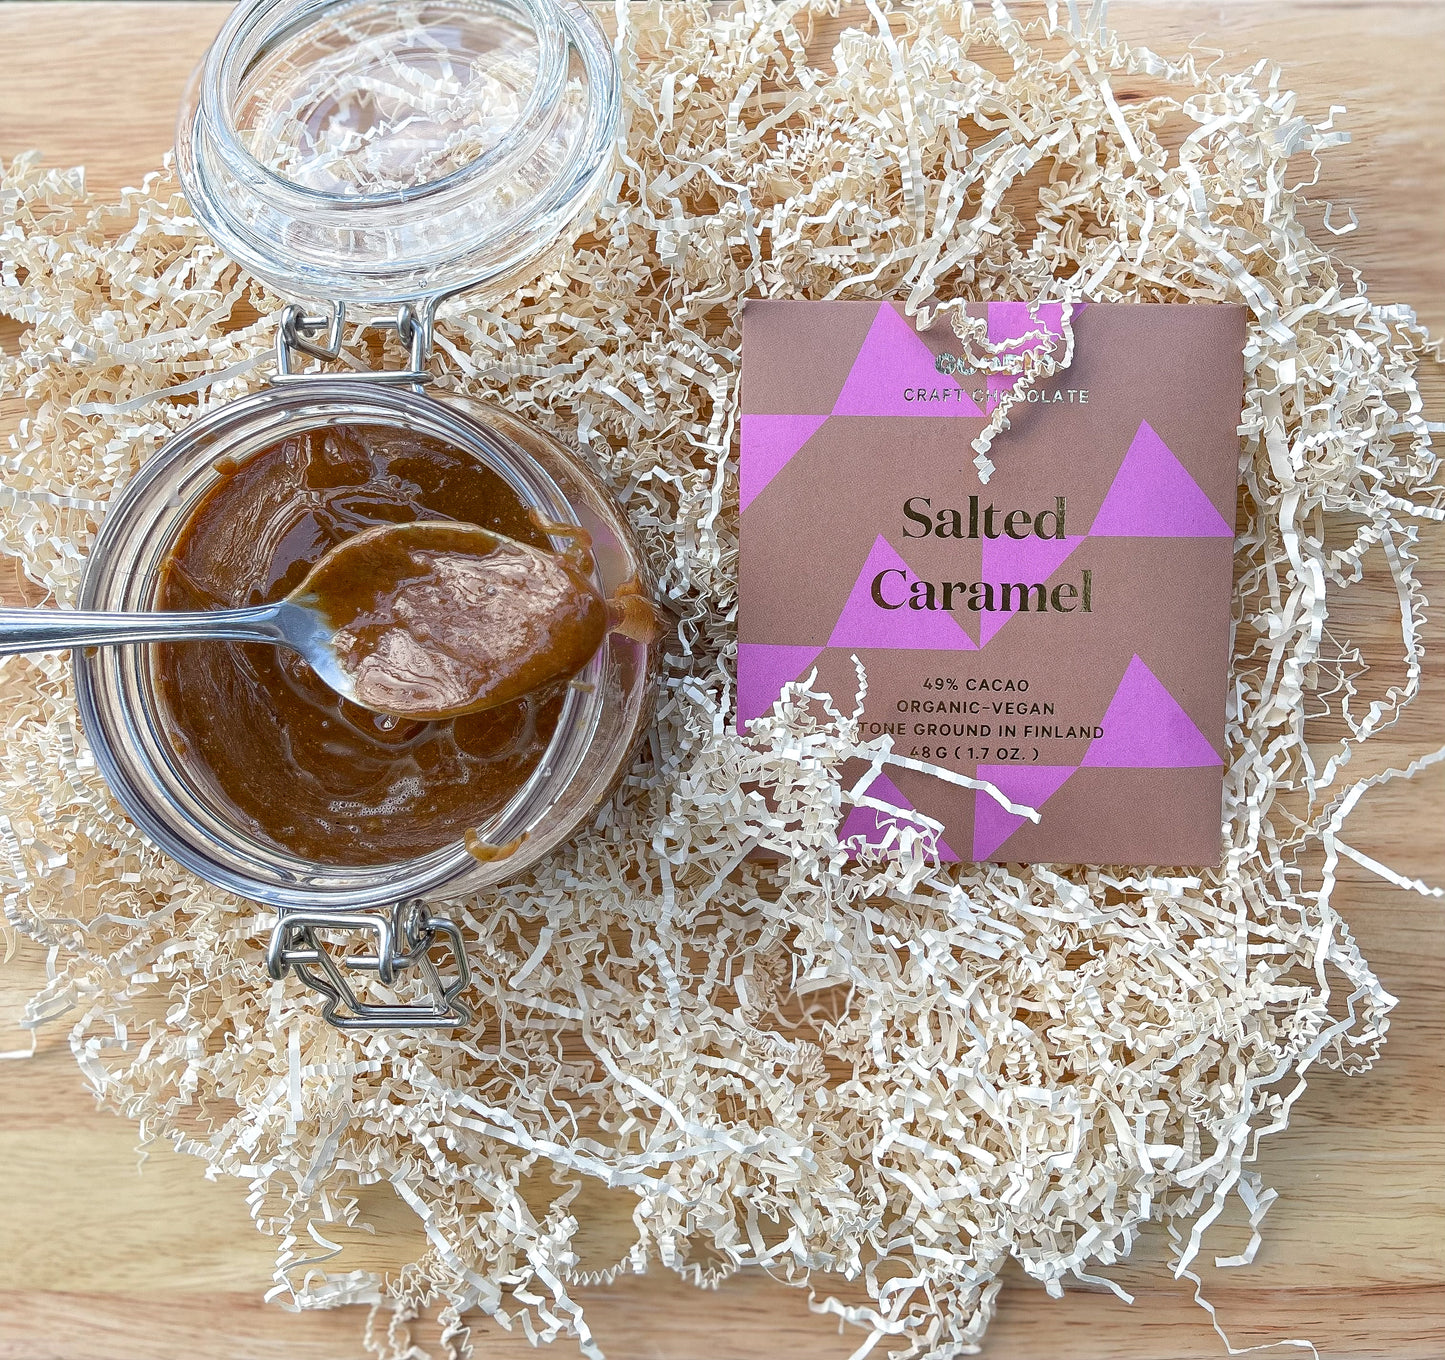 Salted Caramel Chocolate 49%